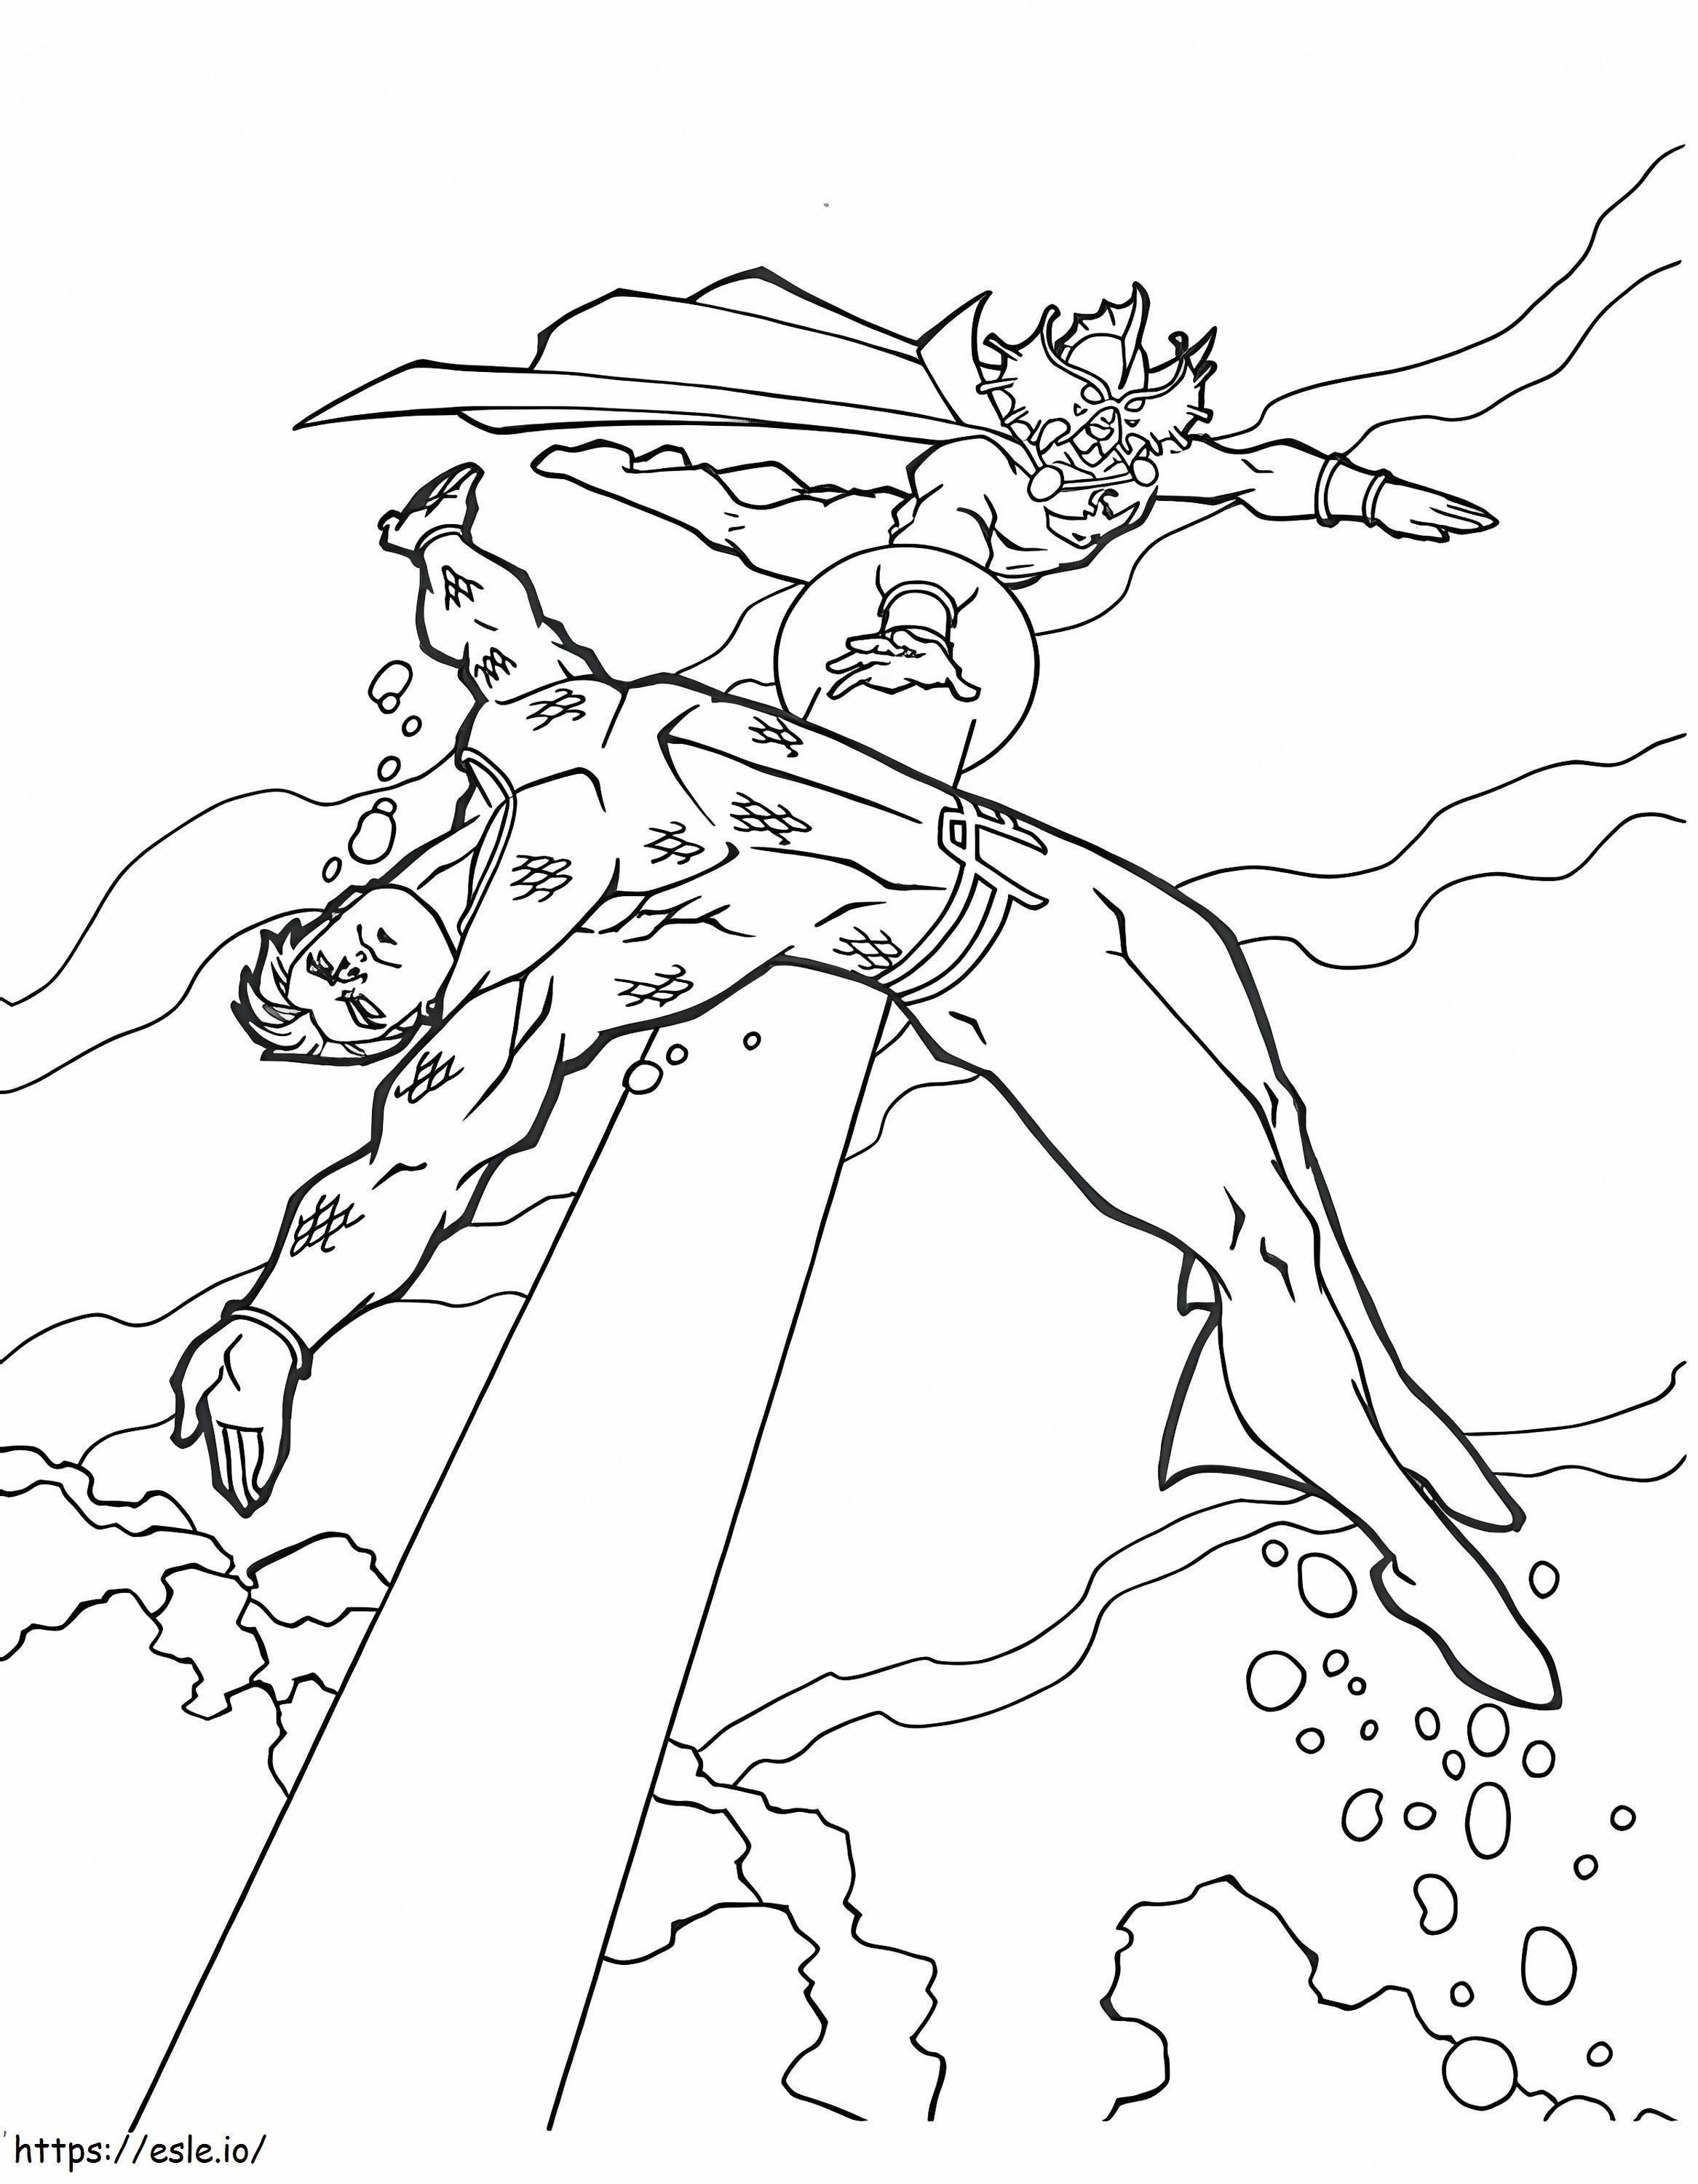 Aquaman Vs Ocean Master coloring page